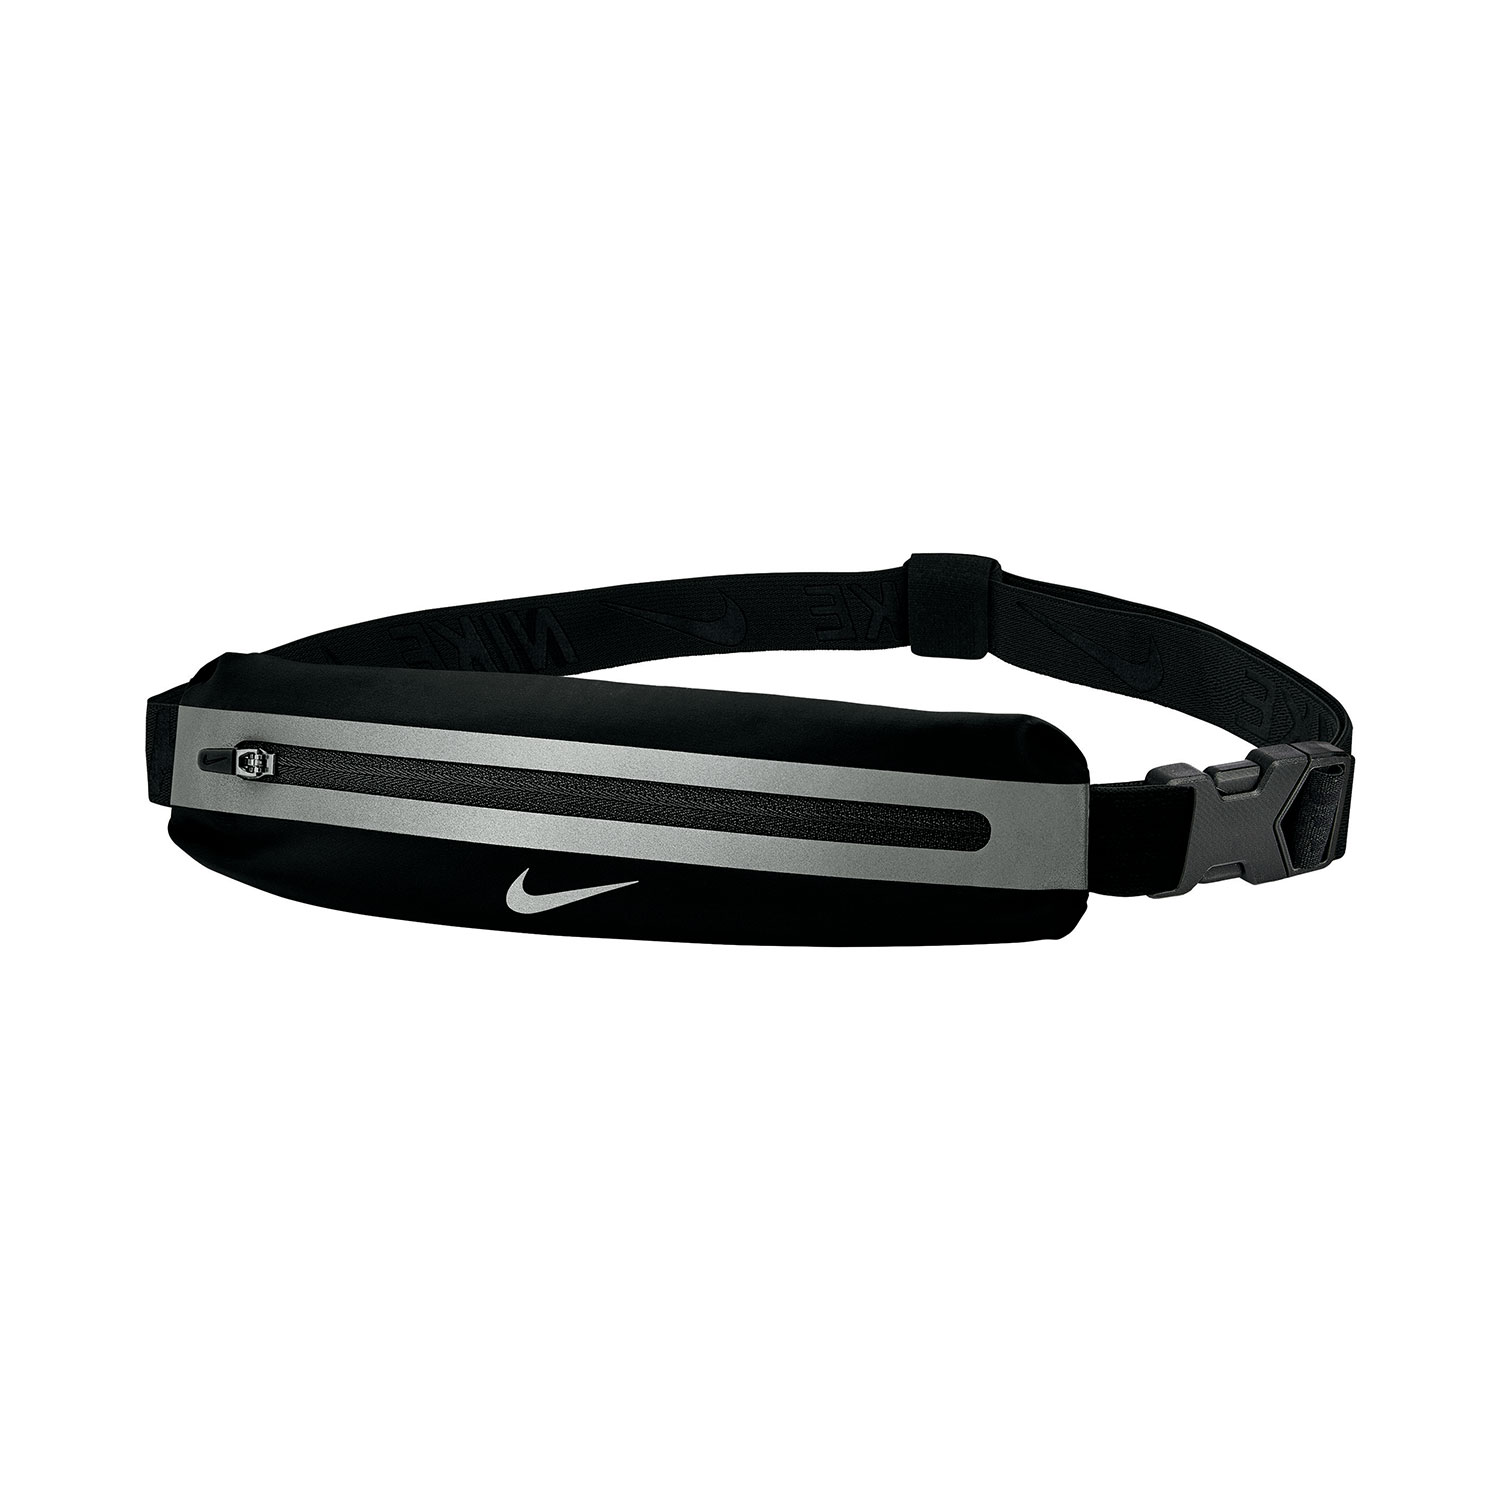 Nike Slim 3.0 Waistpack - Black/Silver